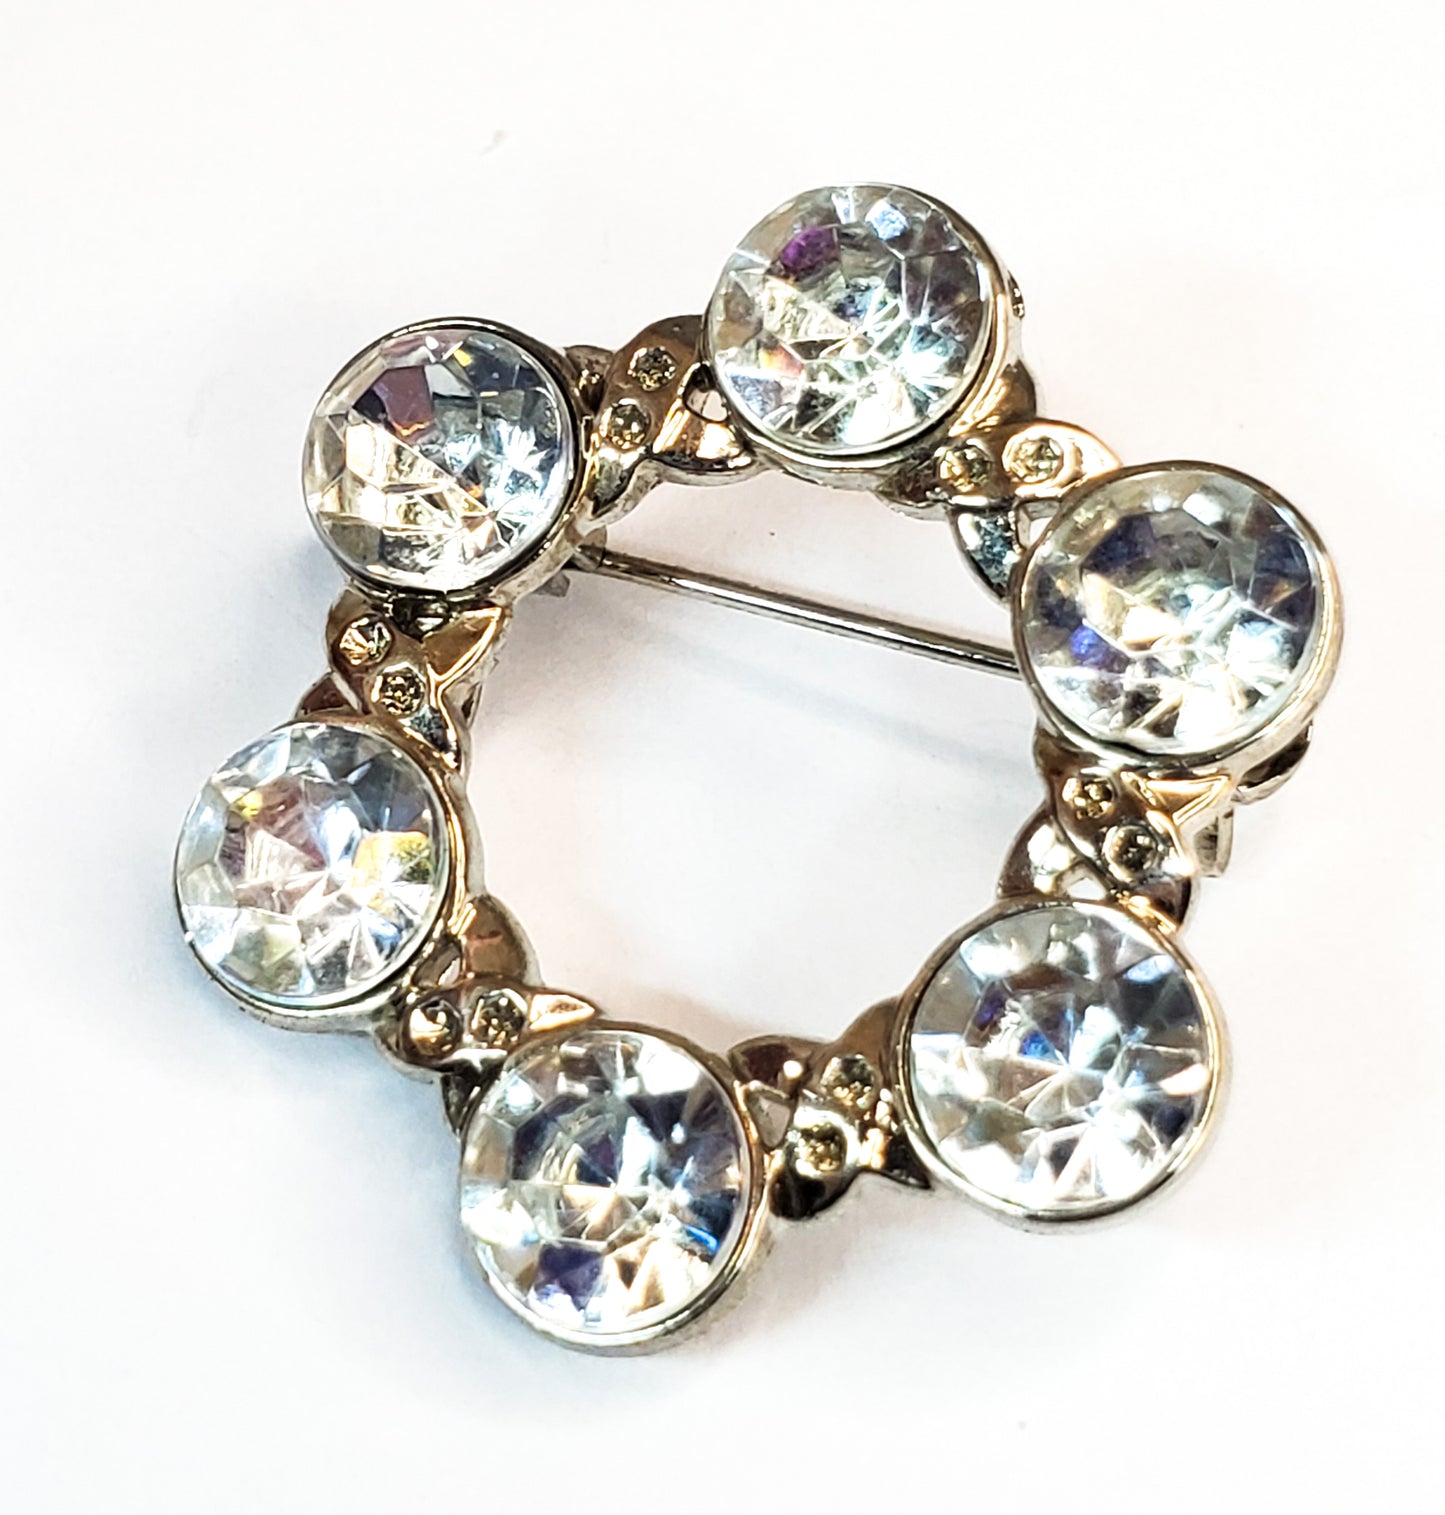 Pave set rhodium plated bright clear rhinestone circle brooch